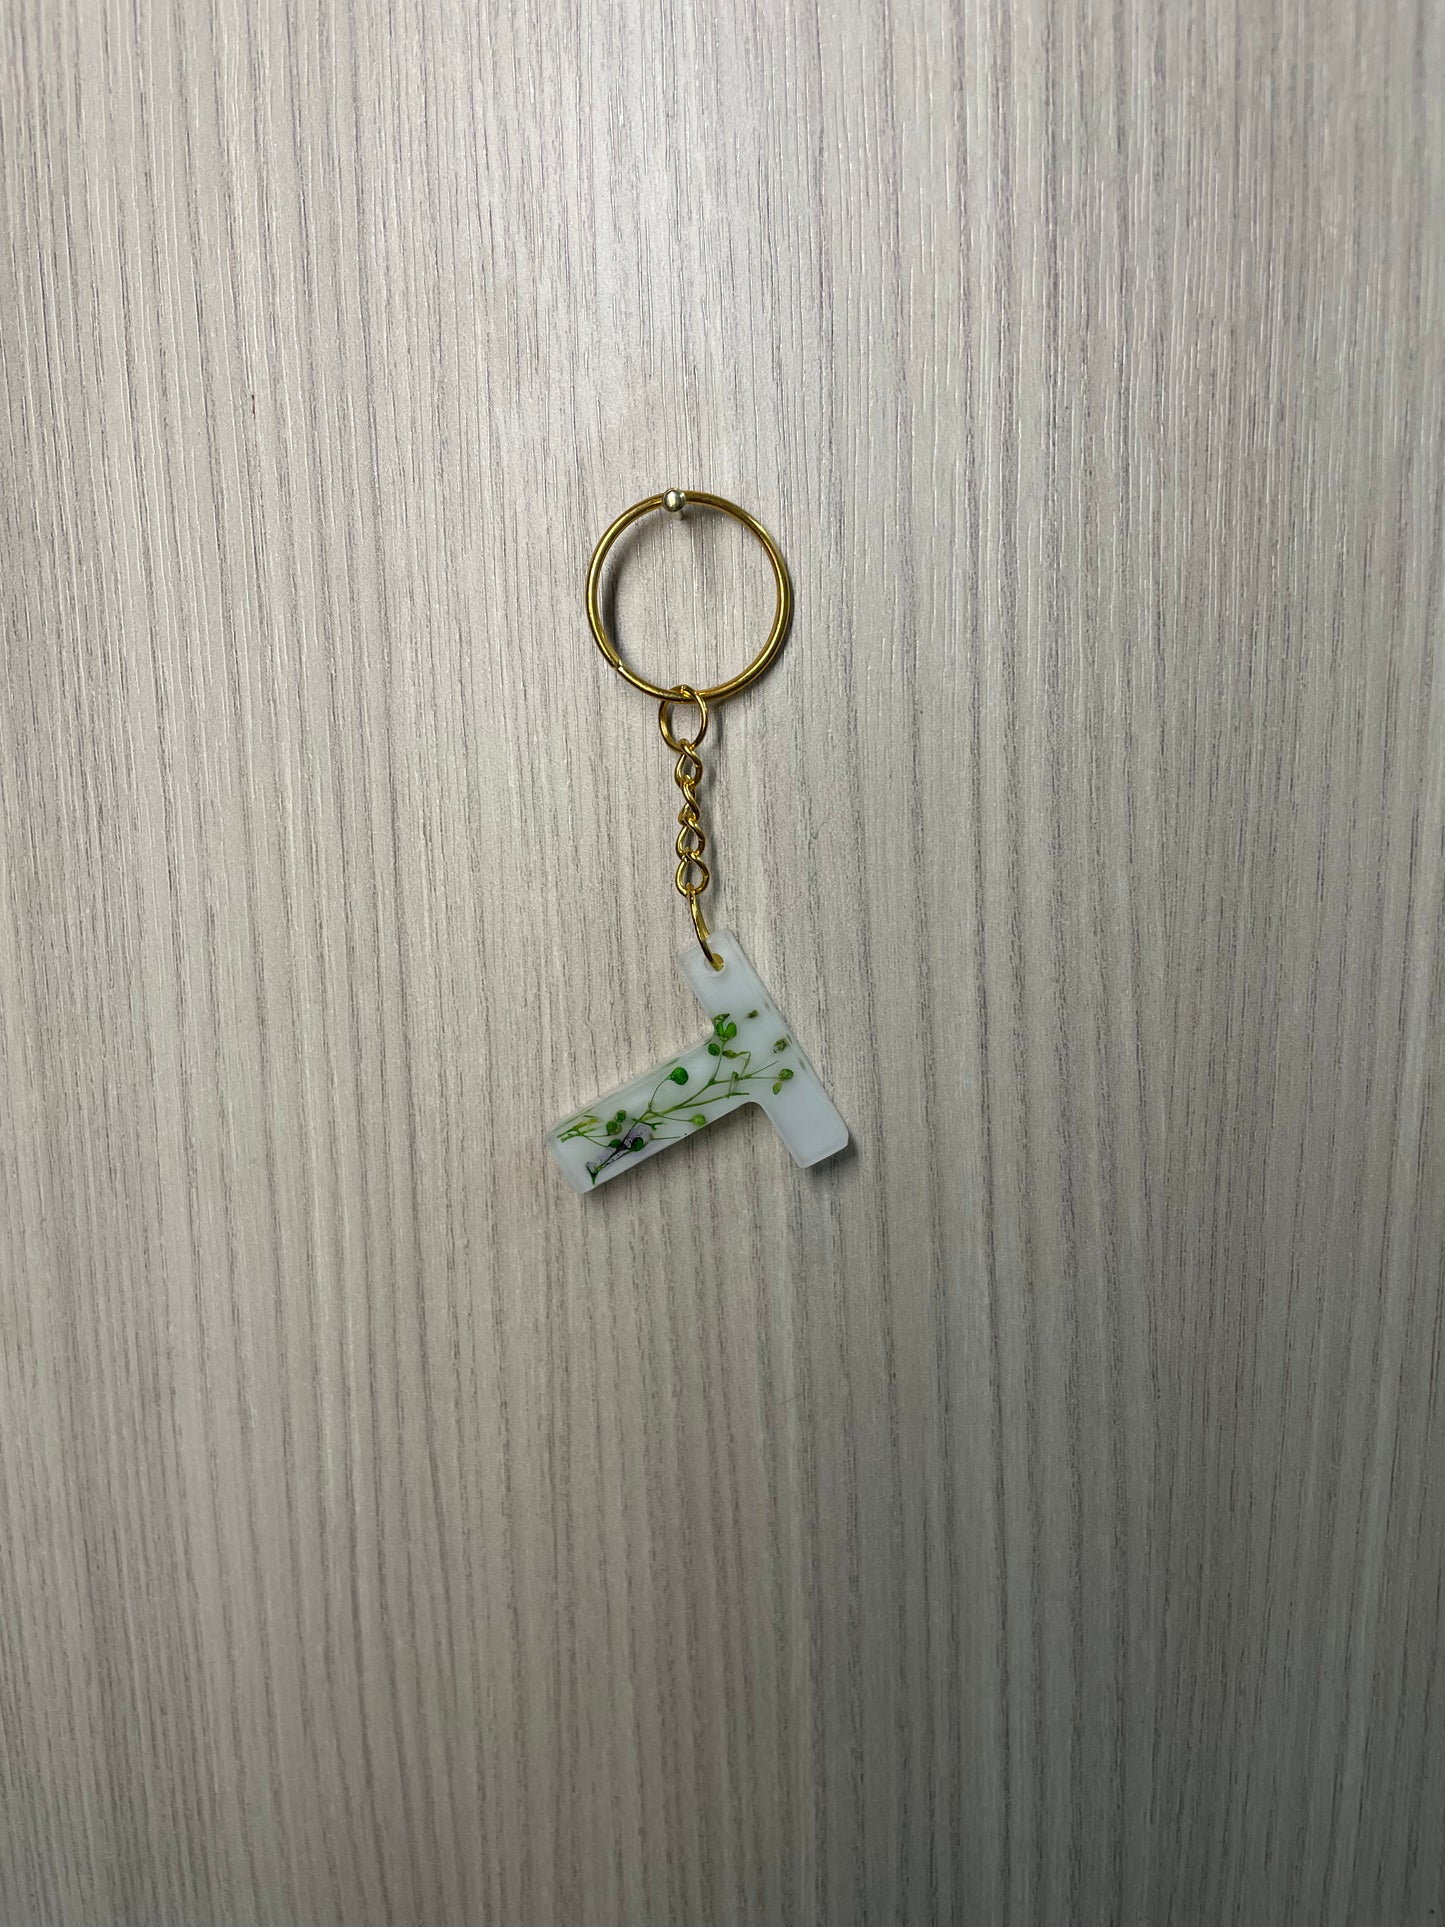 Acrylic keychains